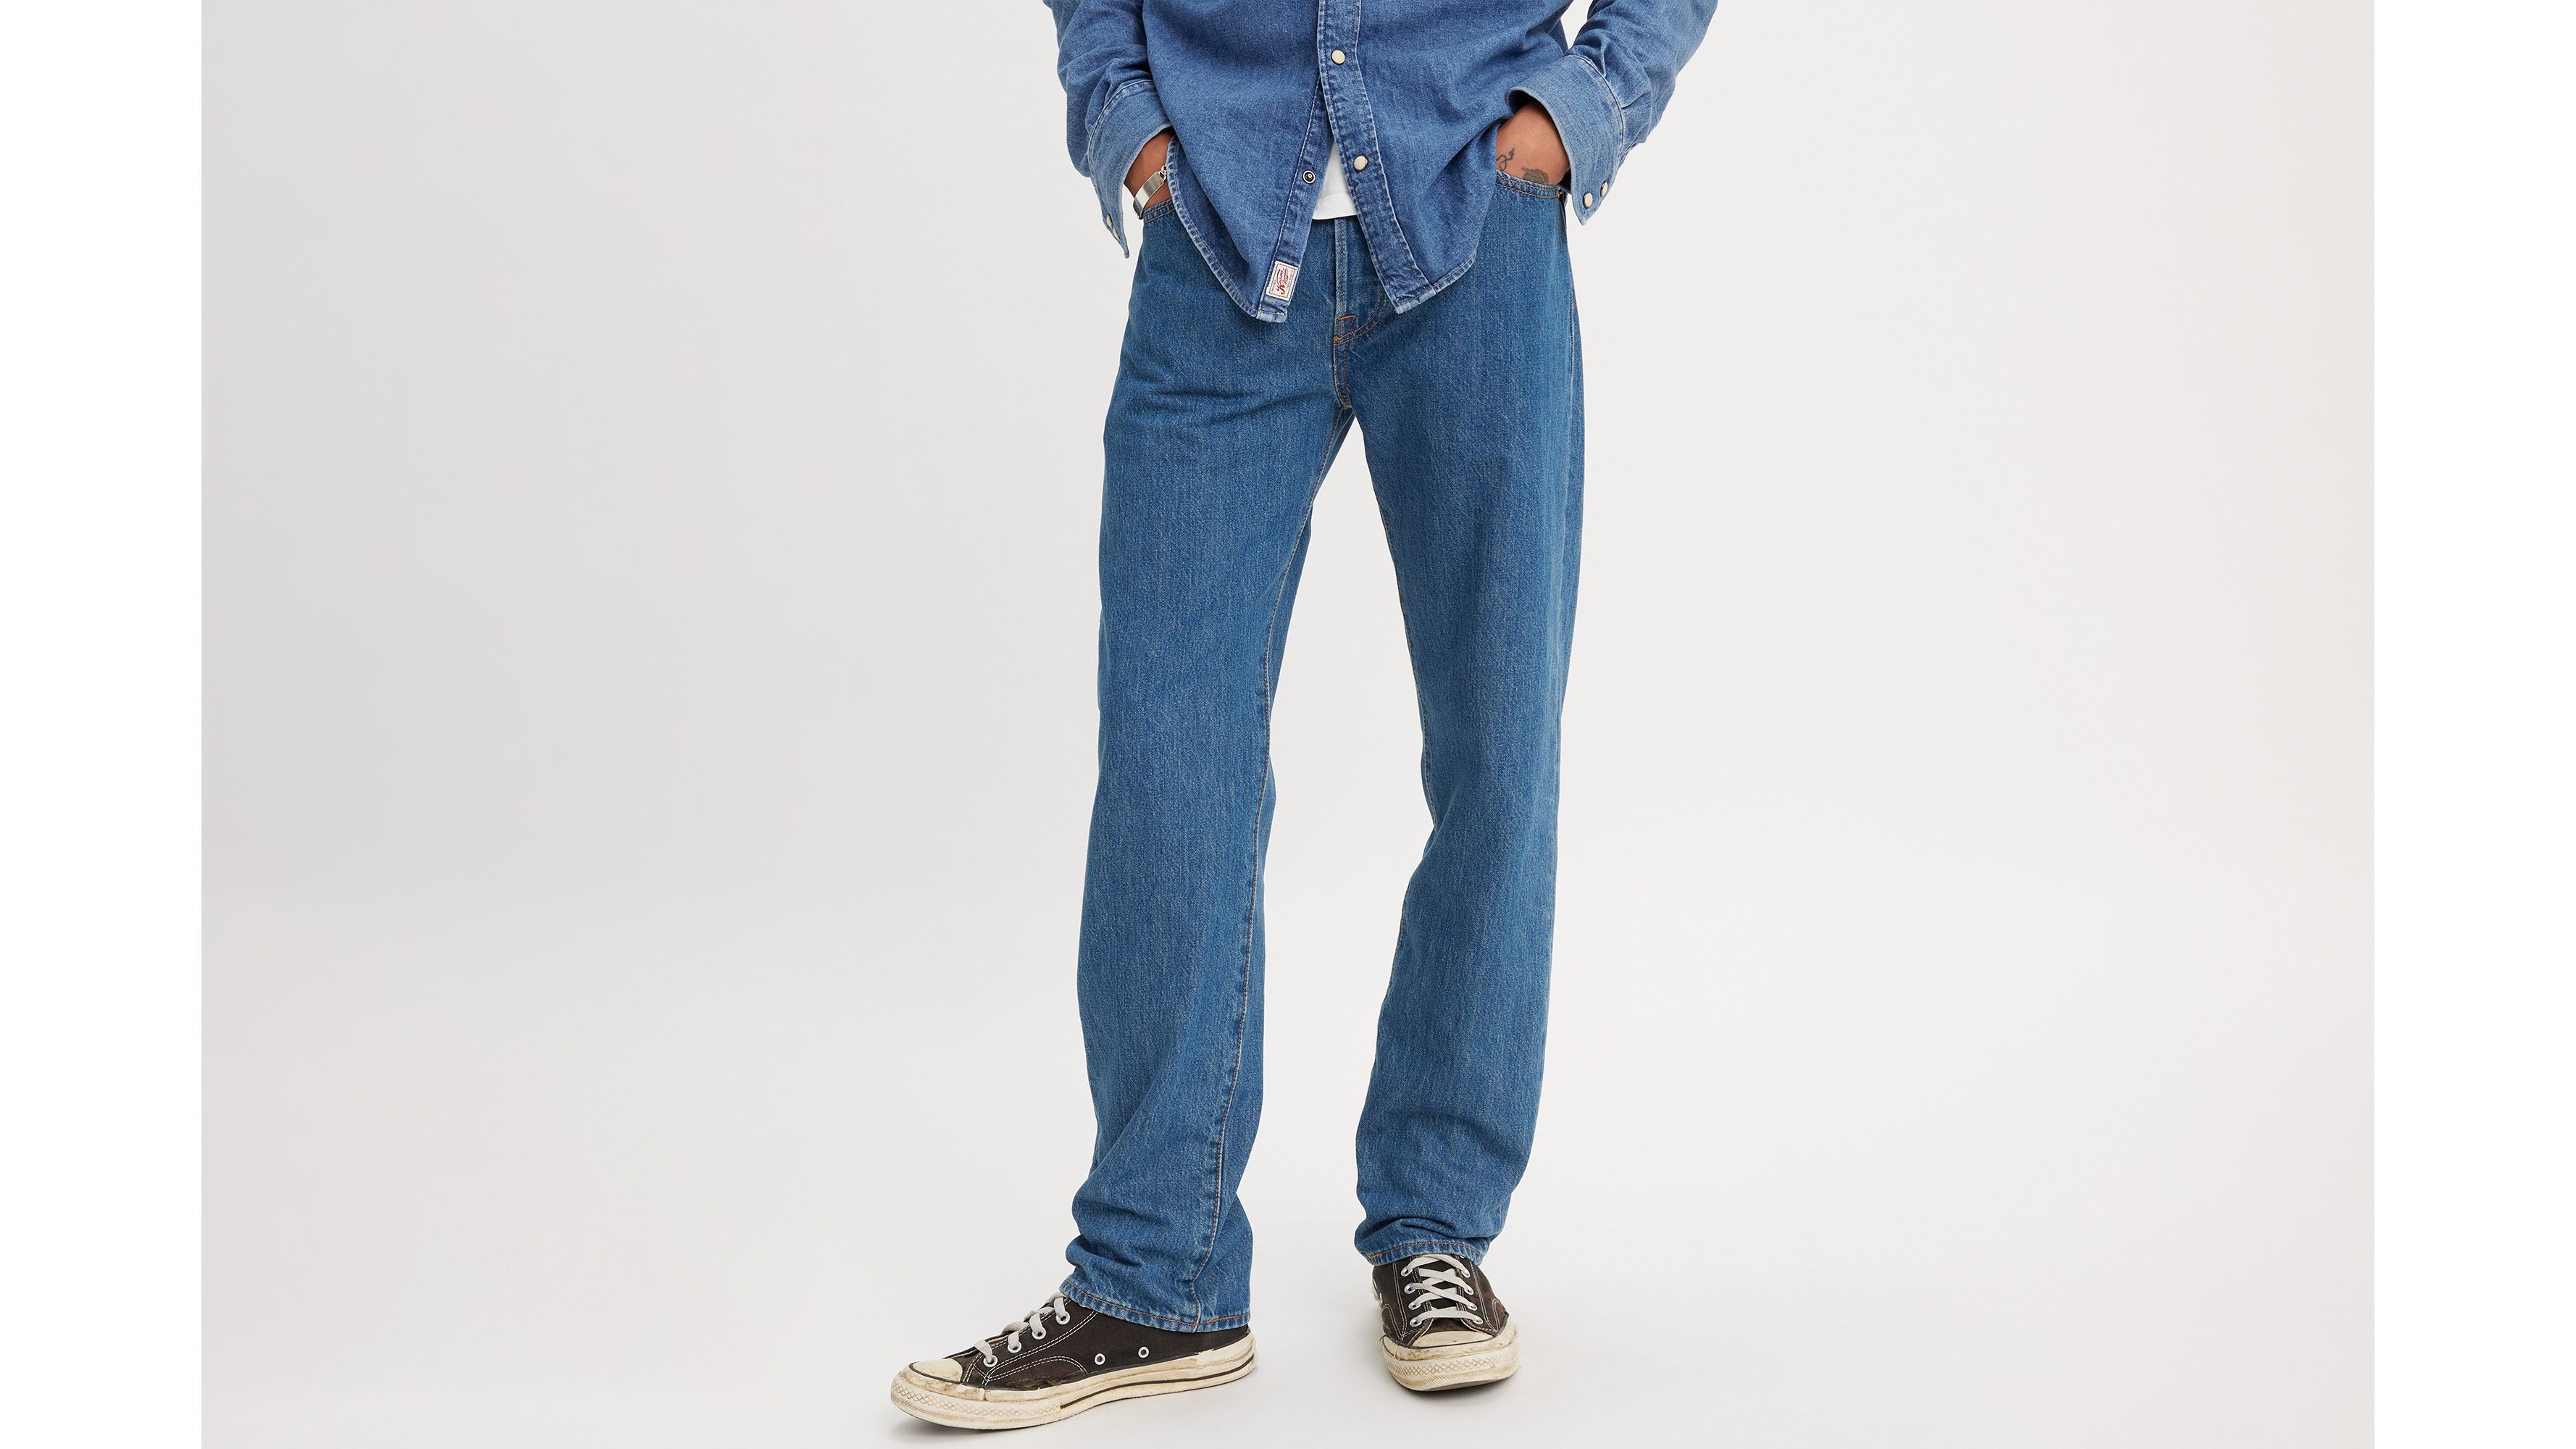 Levis Husky Jeans Size Chart